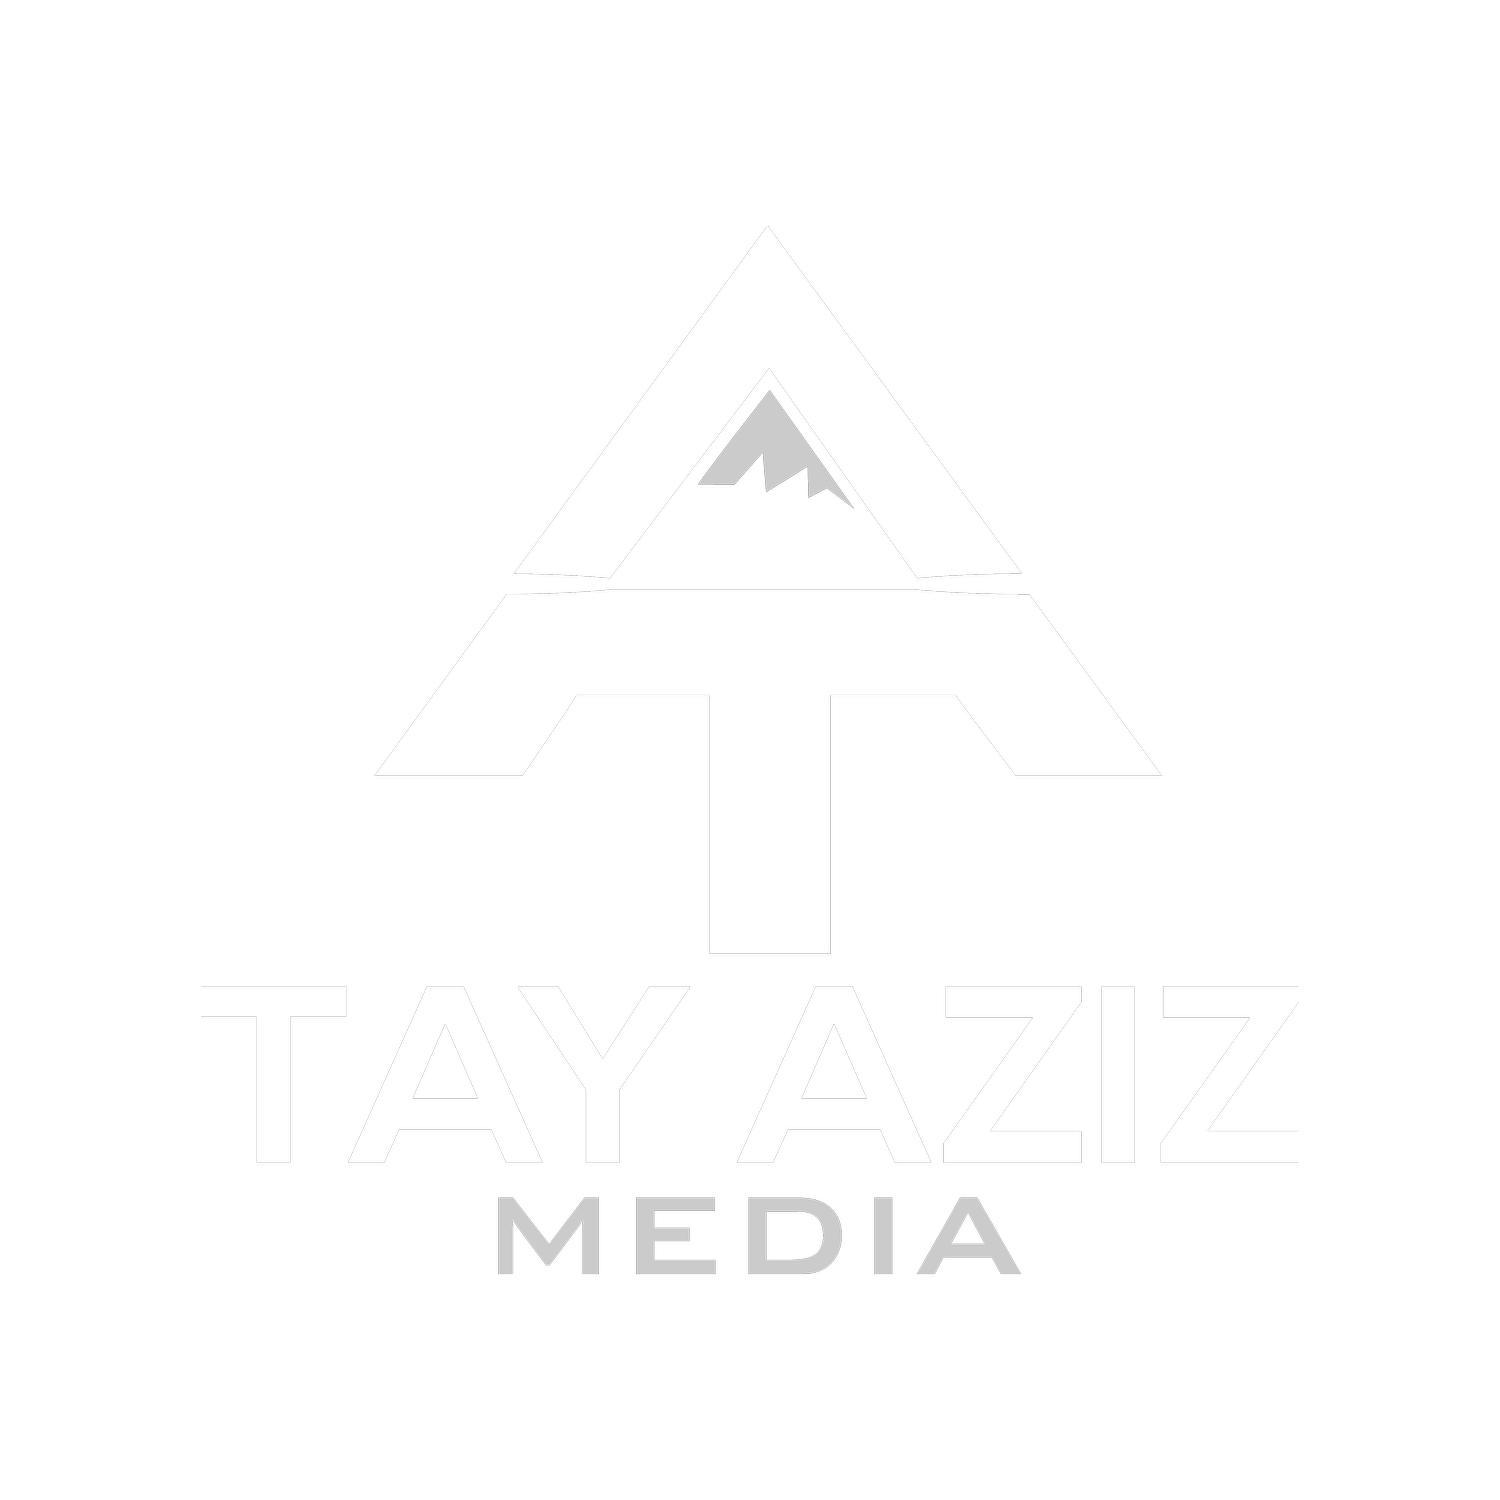 Tay Aziz Media